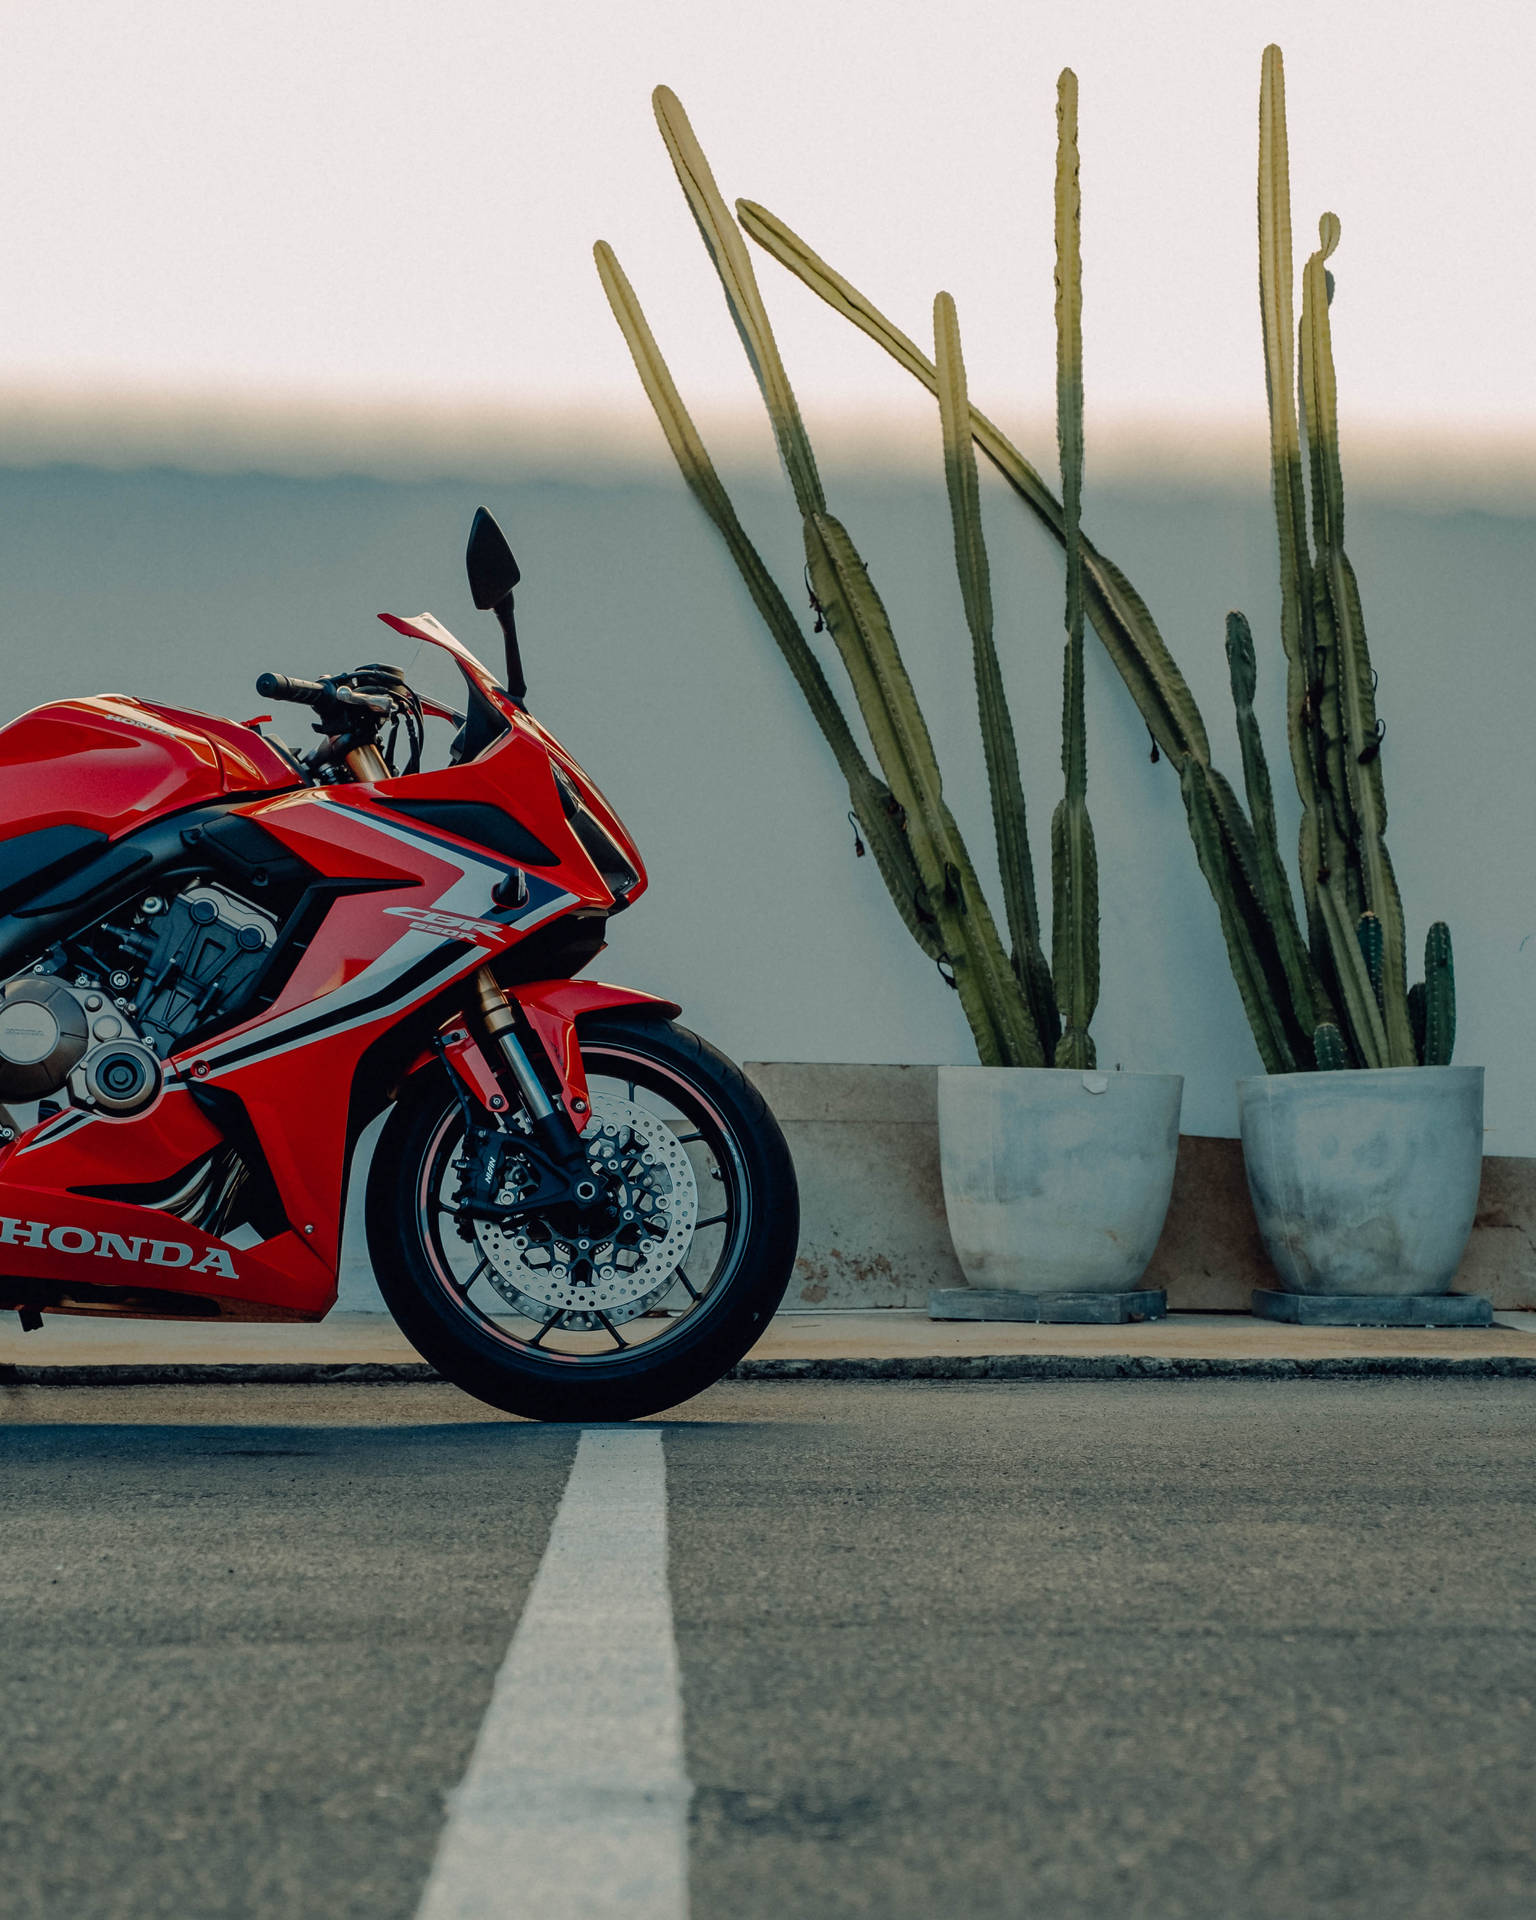 Sleek and Stylish - Honda's Red Motorcycle Wallpaper